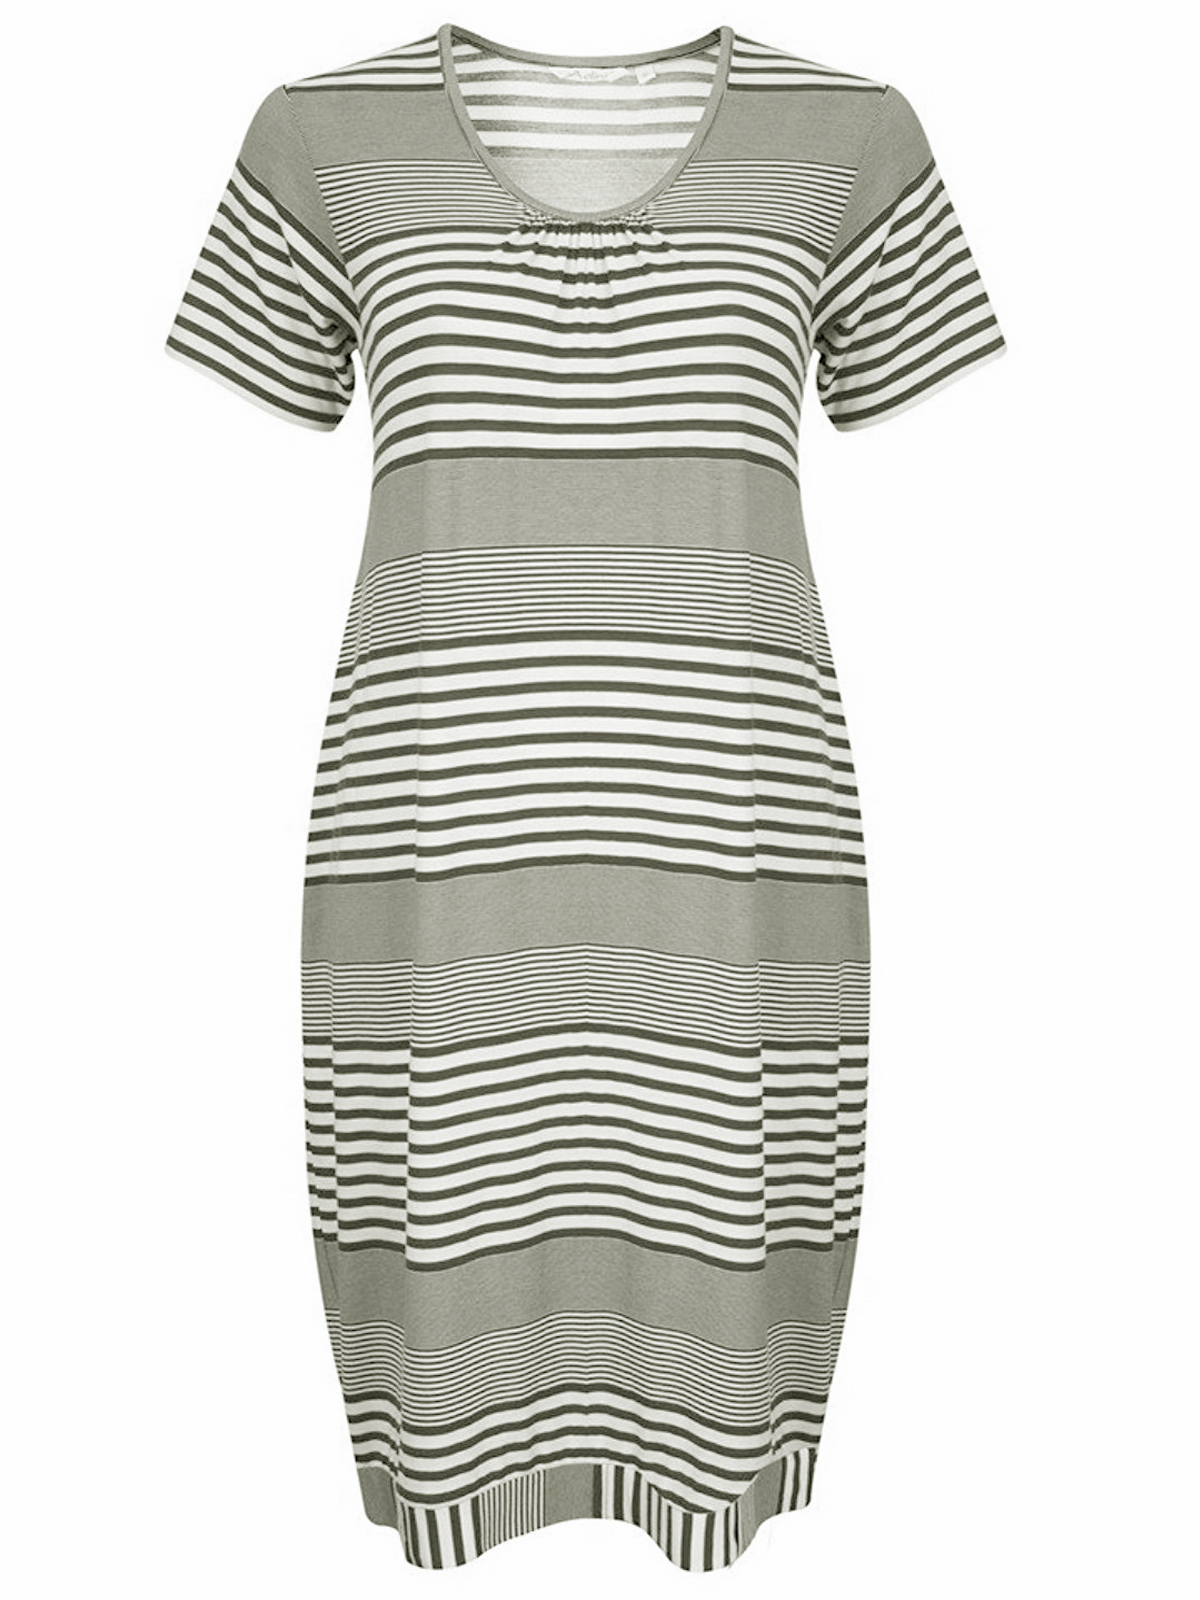 Adini - - Adini GREY Newport Stripe Kay Dress - Size 16 to 22